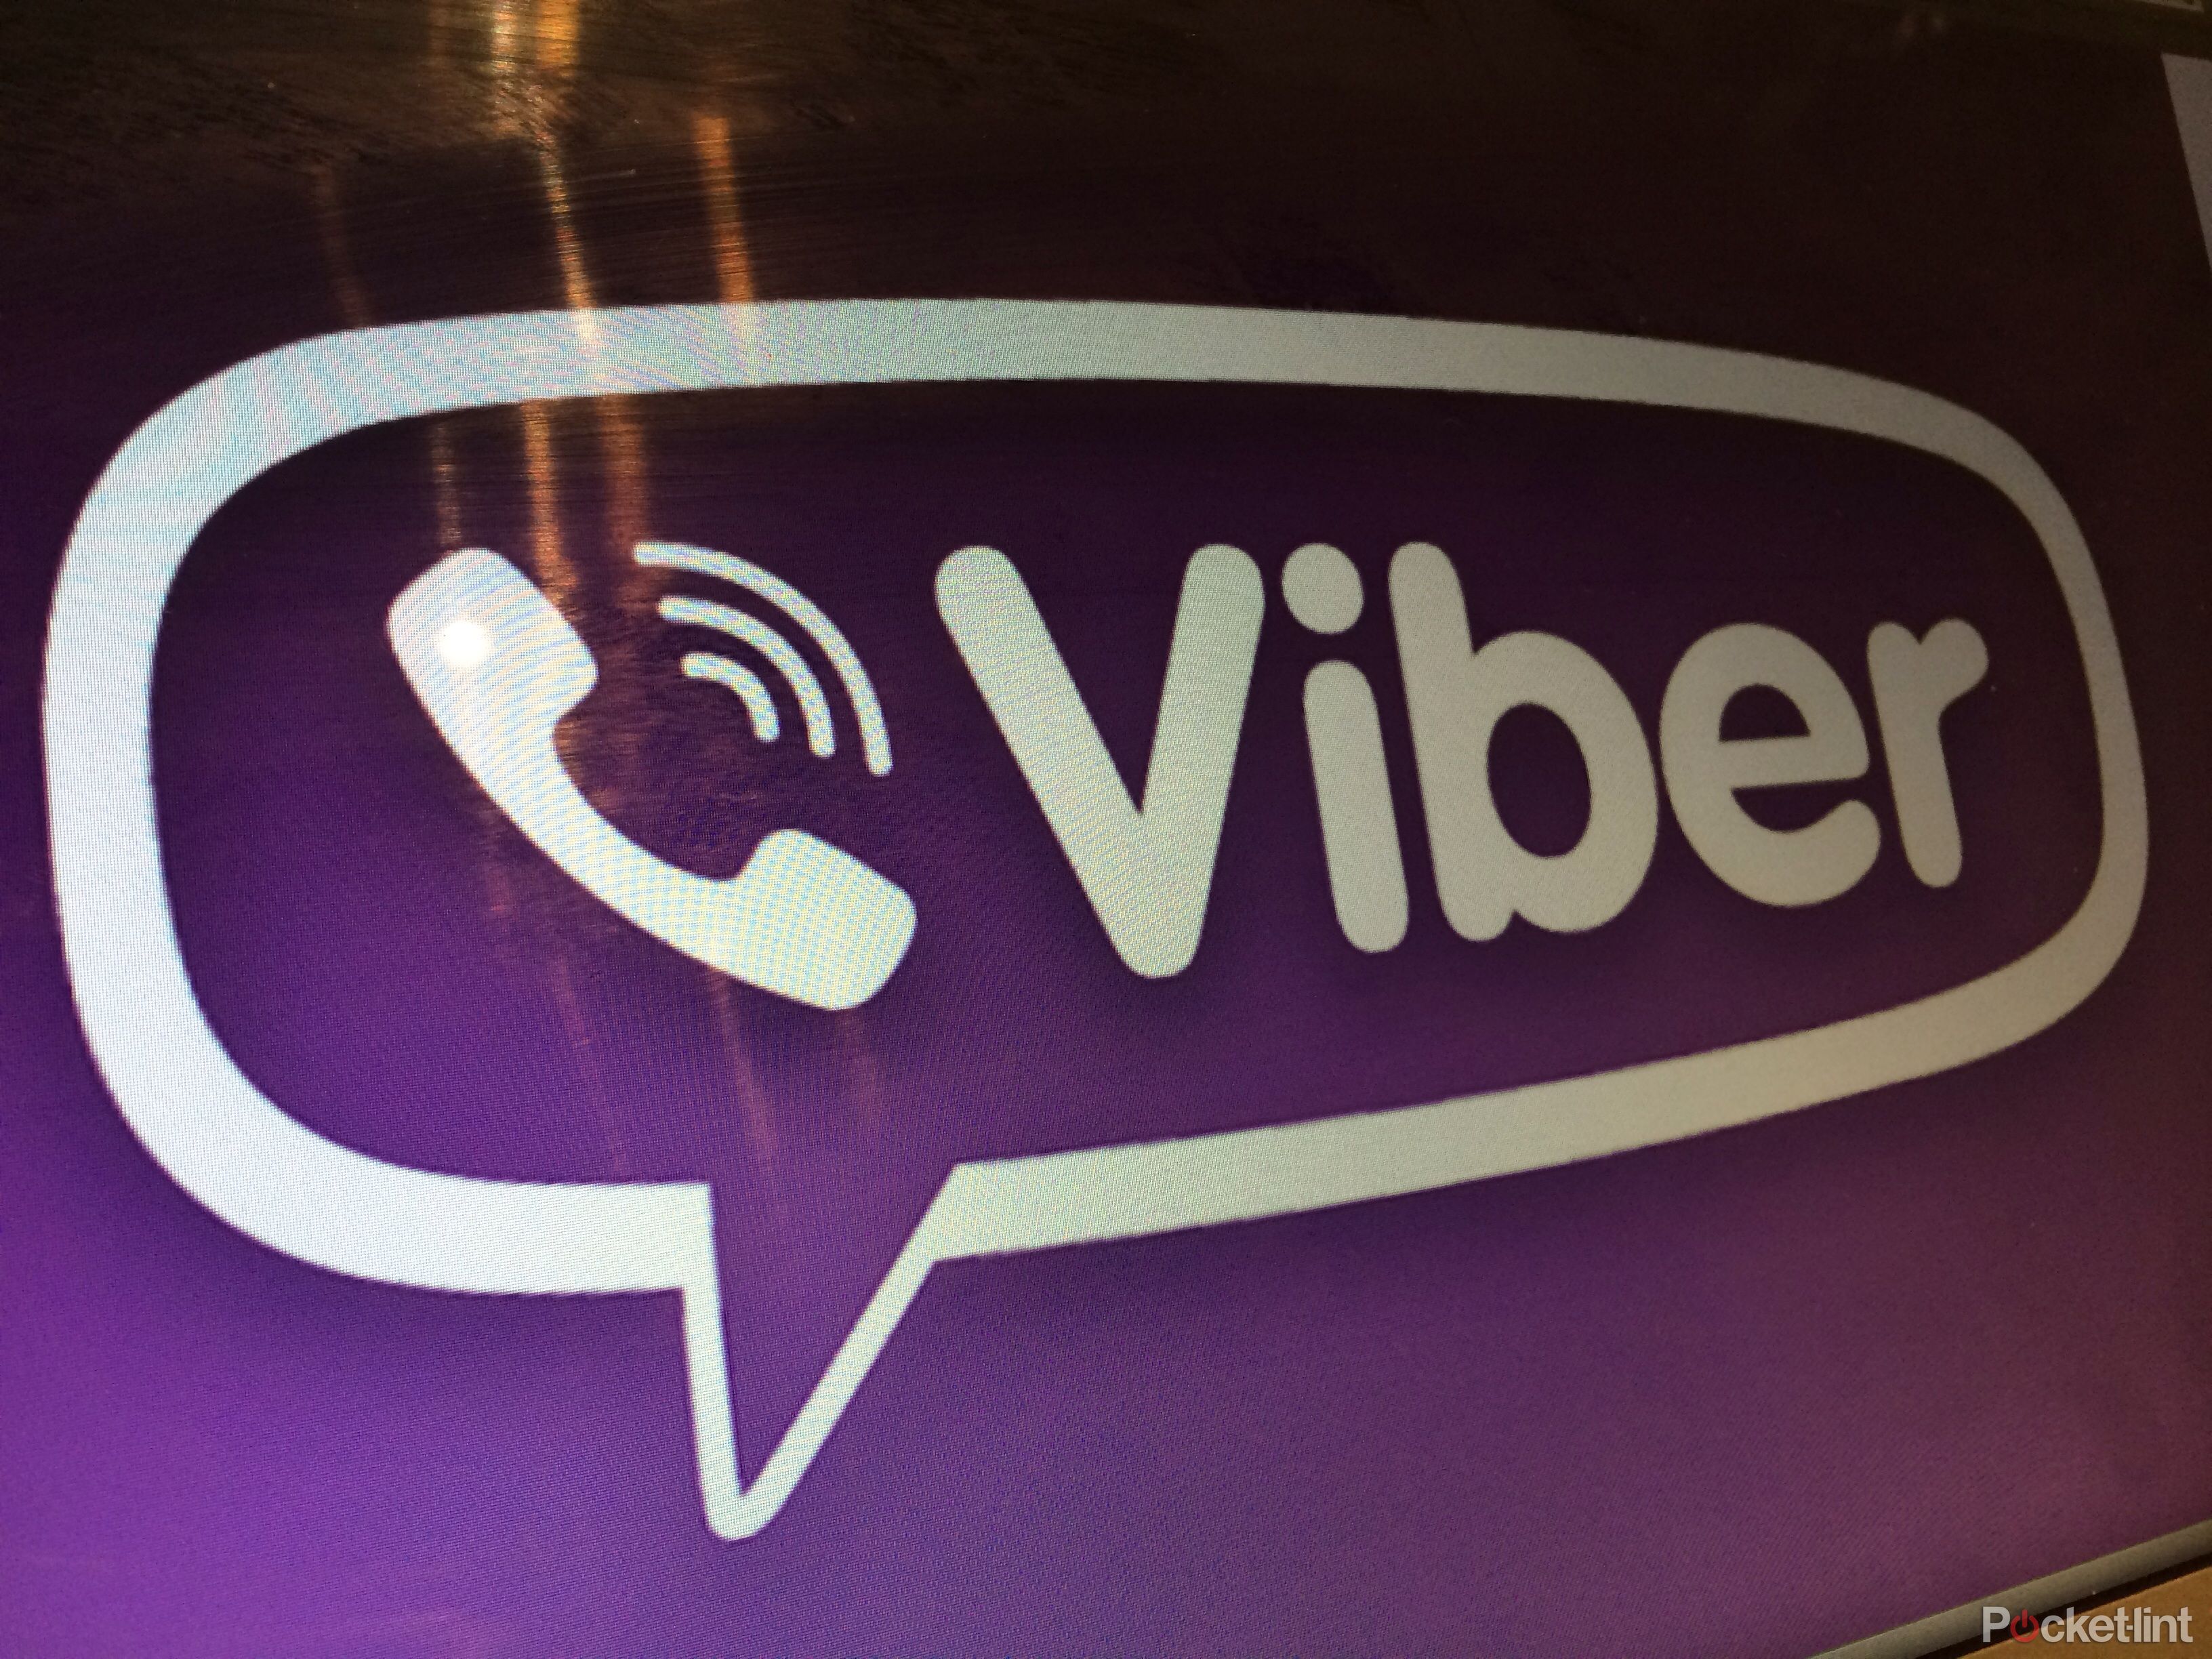 rakuten owner of play com wuaki tv and kobo buys viber image 1